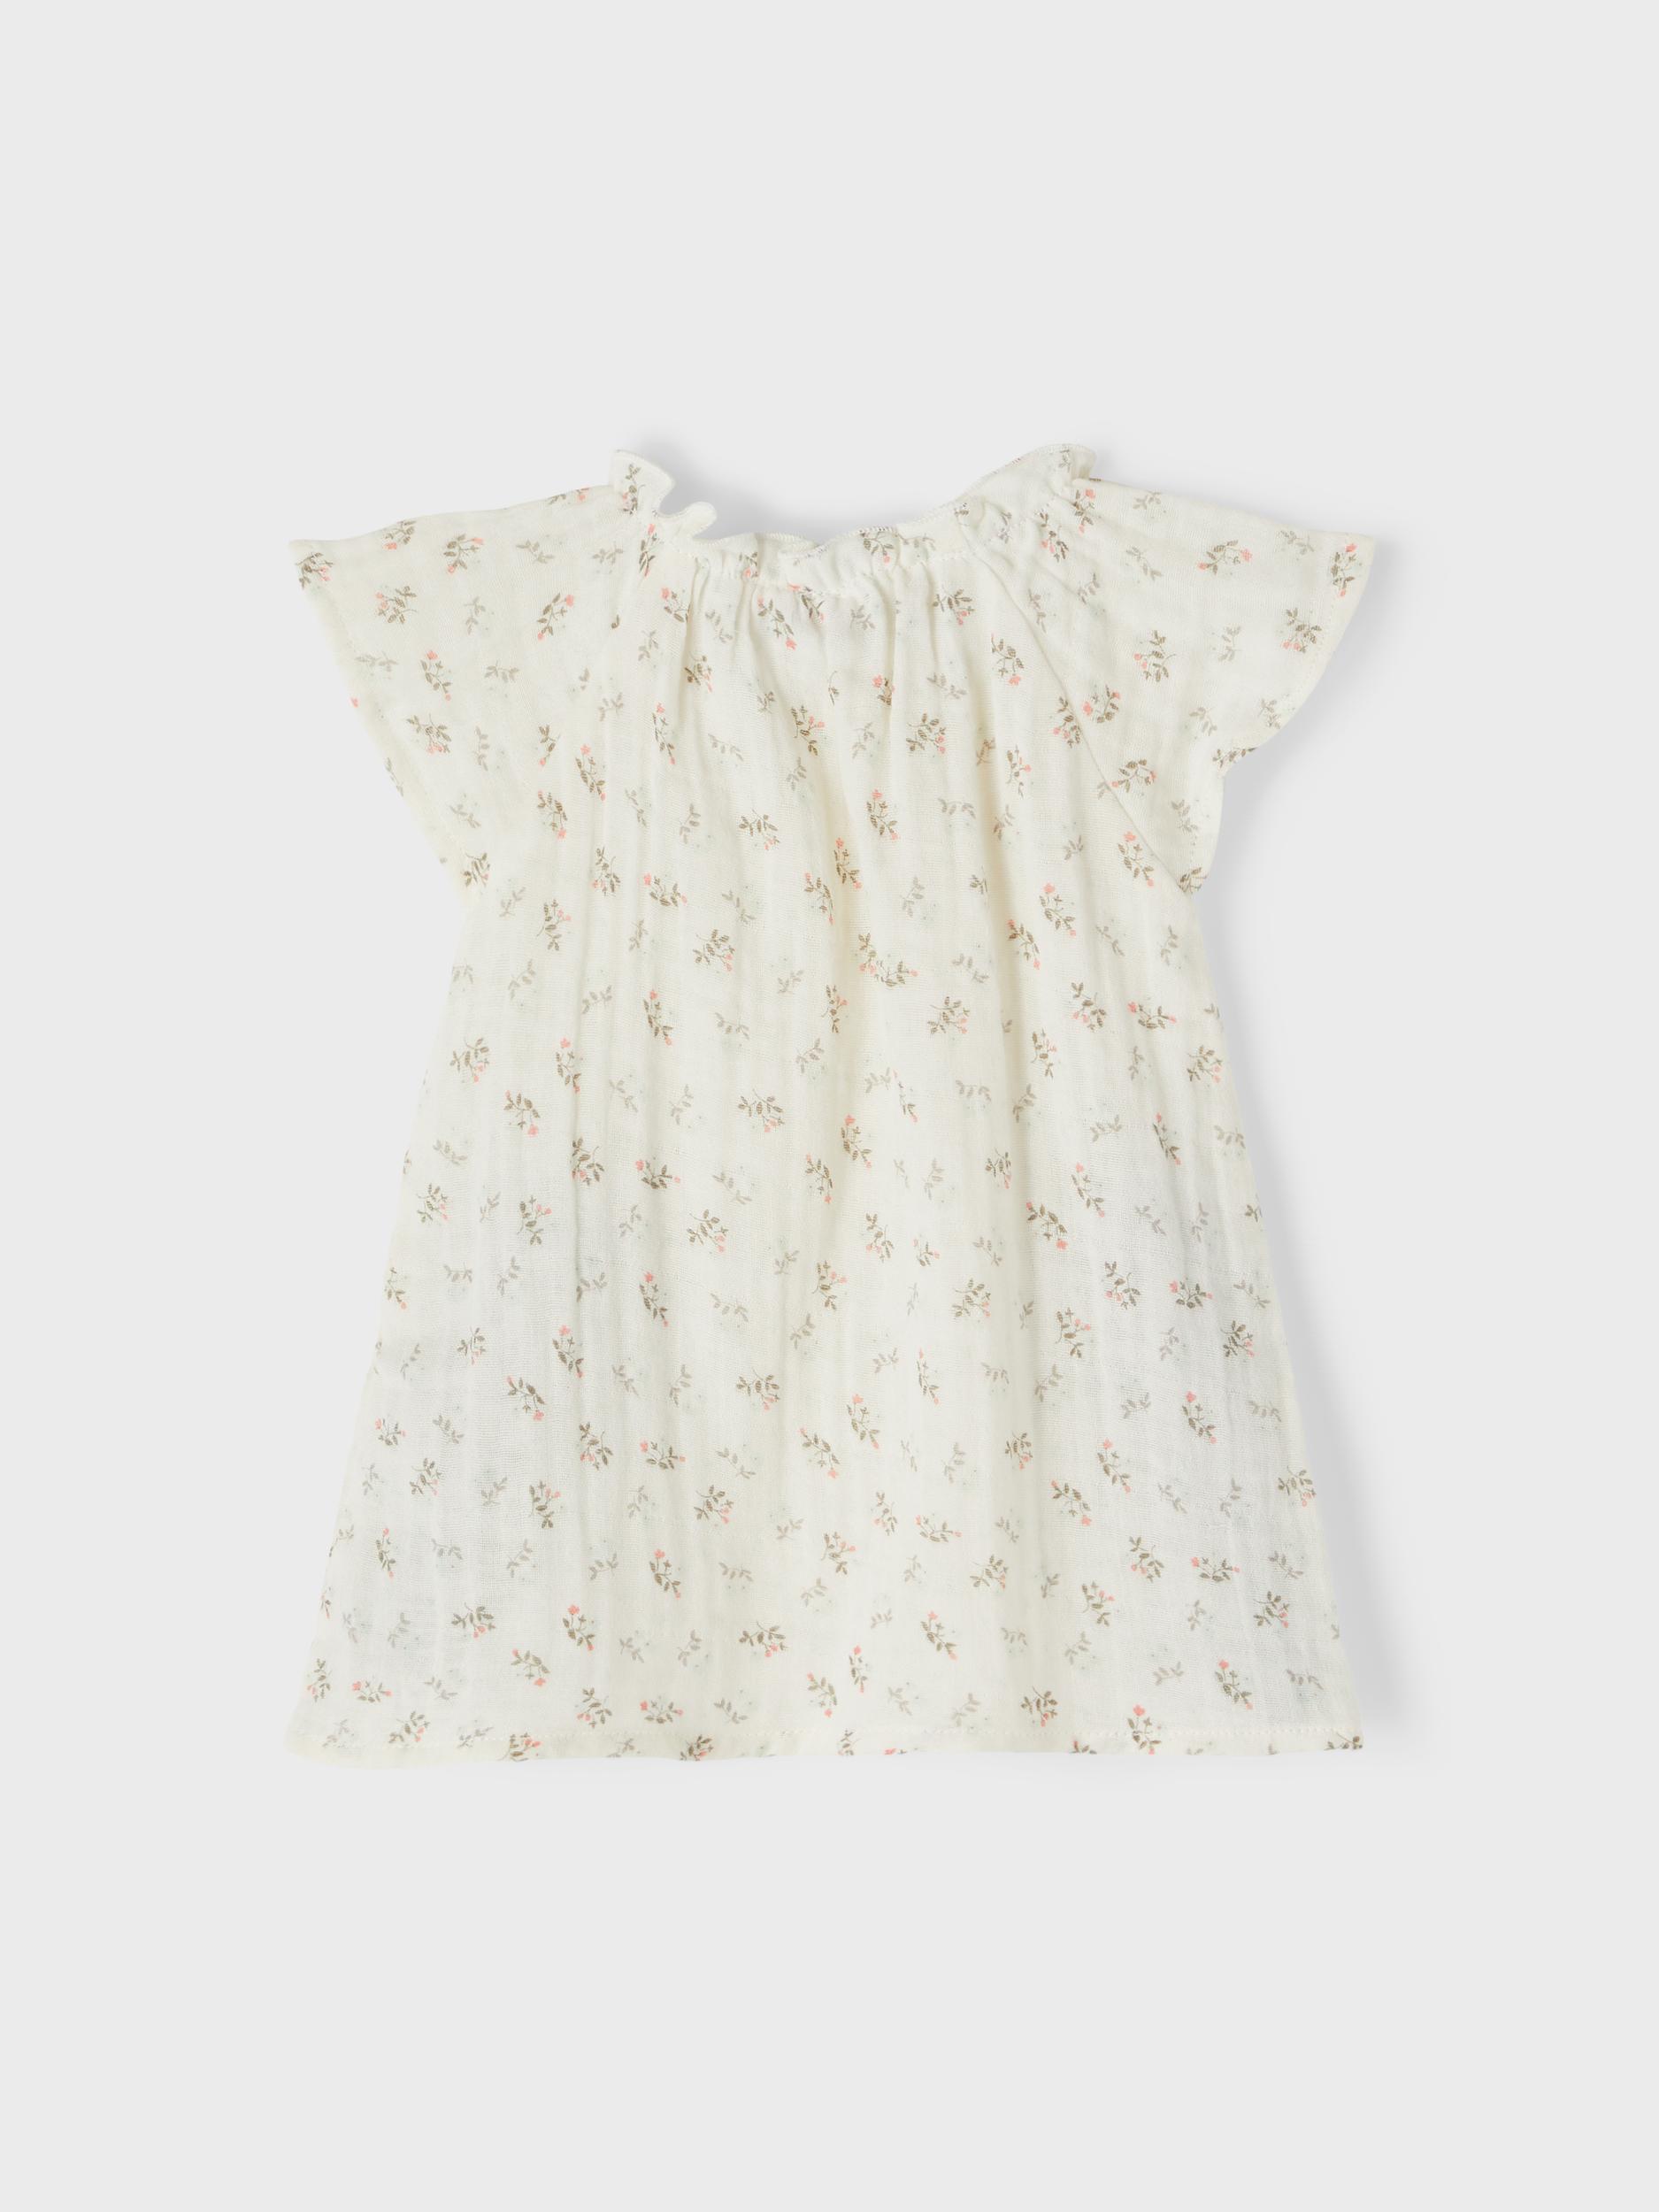  Kjole, White Alyssum, 68 cm